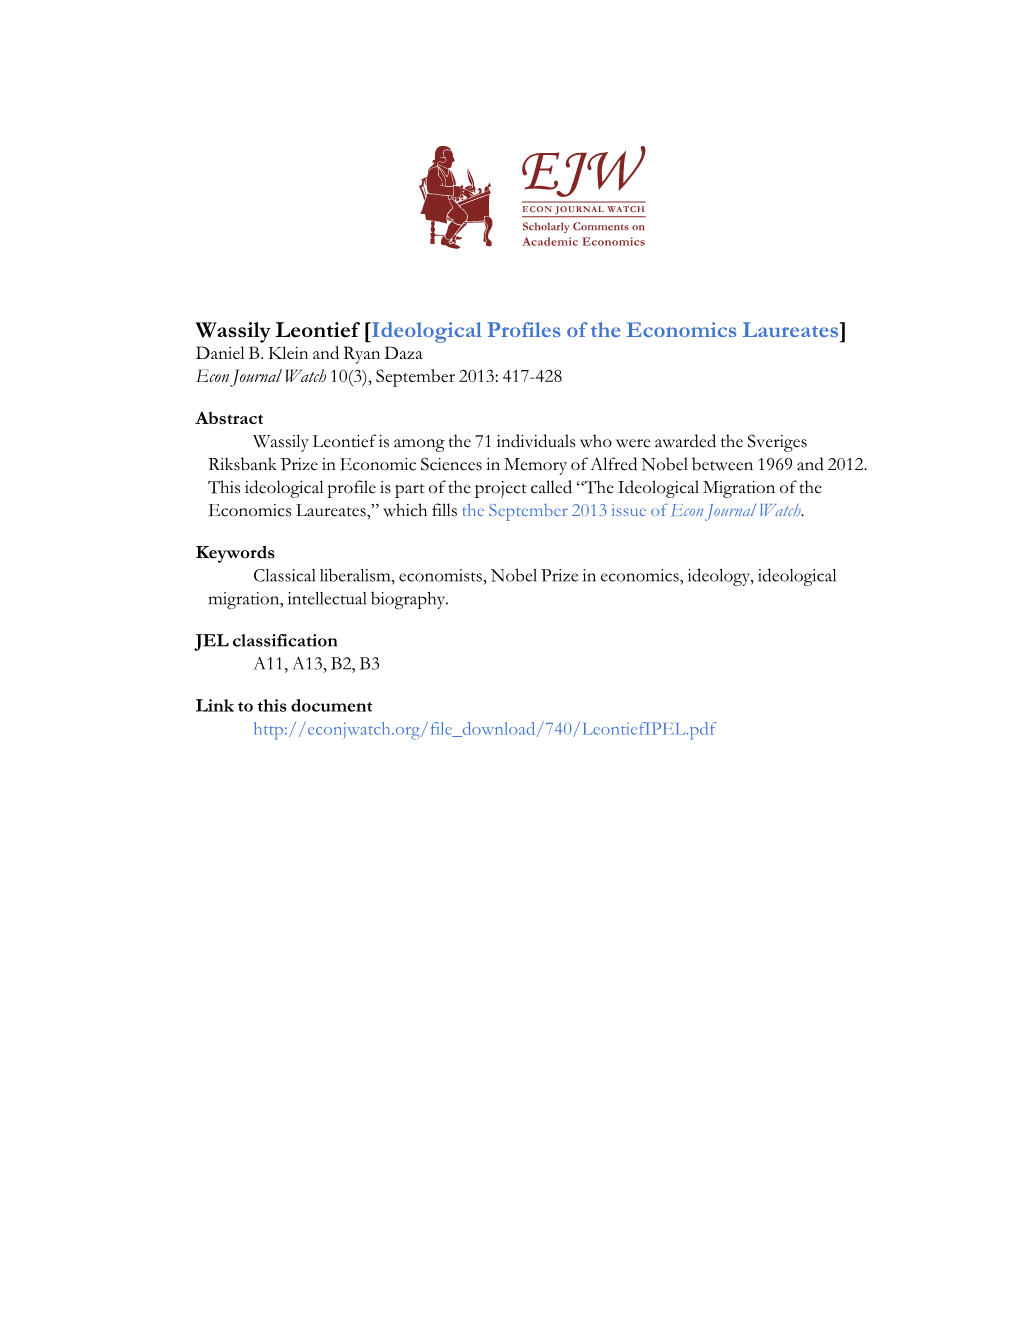 Wassily Leontief [Ideological Profiles of the Economics Laureates] Daniel B